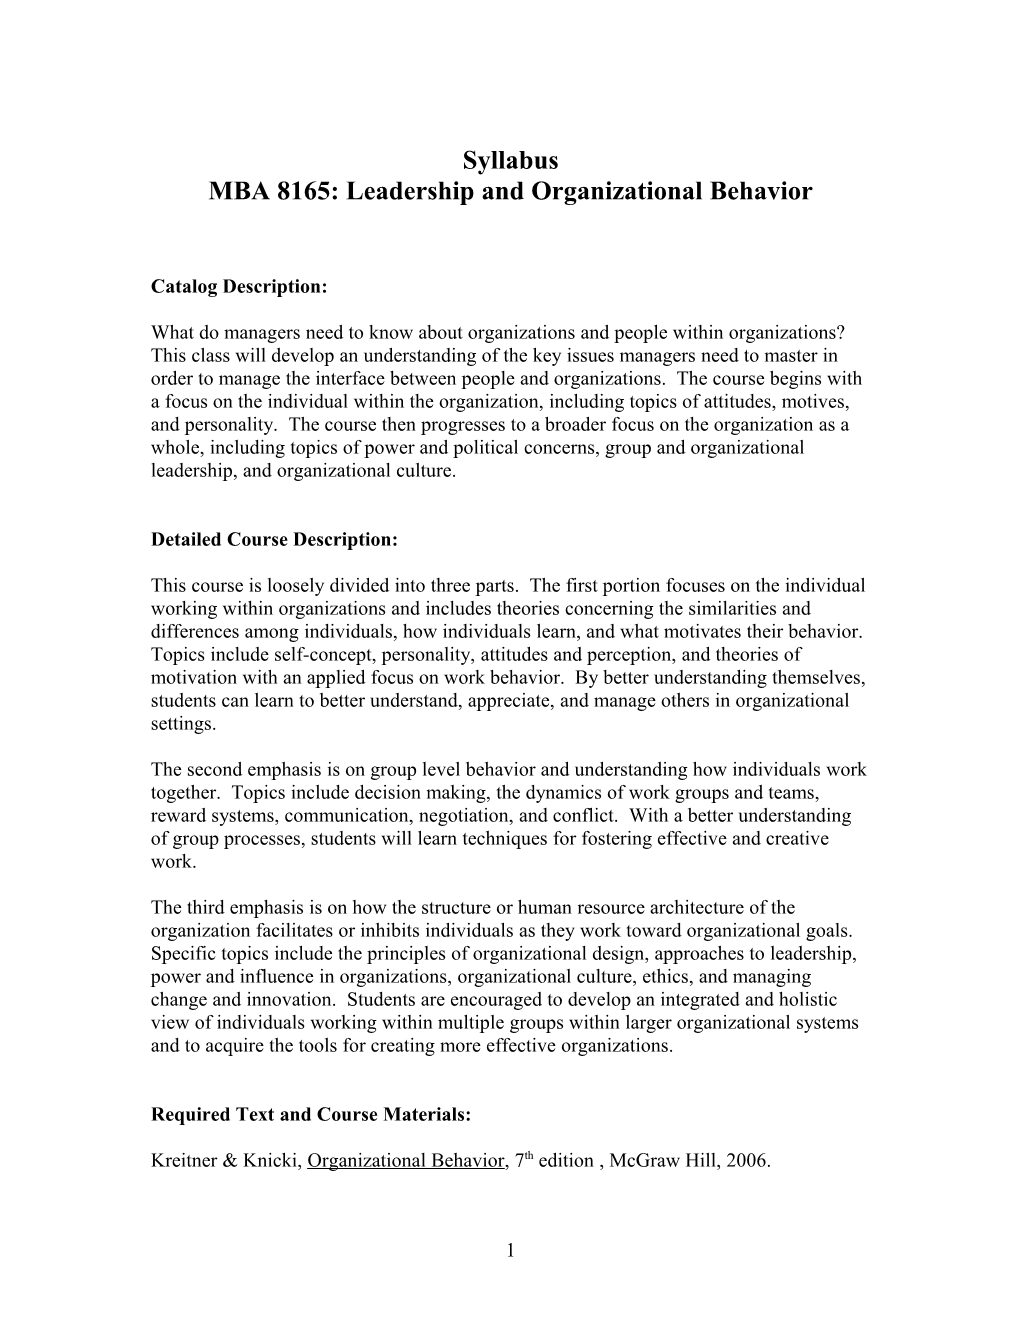 MBA 8165: Leadership and Organizational Behavior